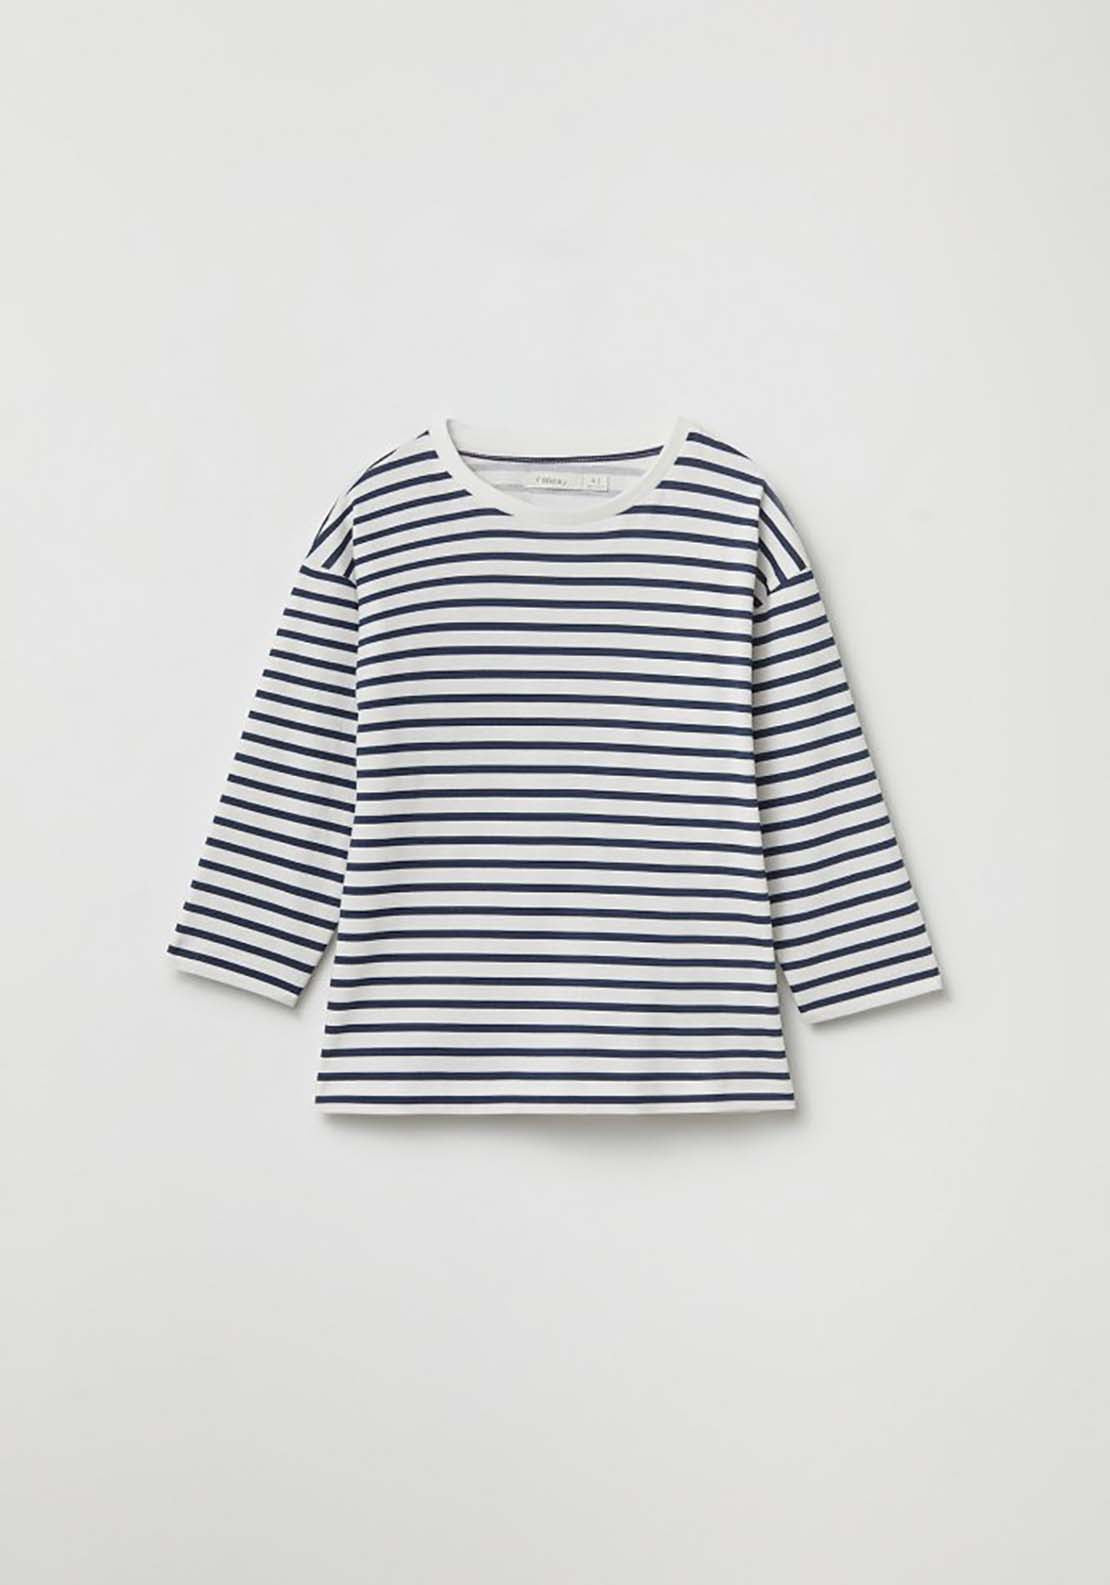 Sfera Striped T-Shirt - Cream 1 Shaws Department Stores